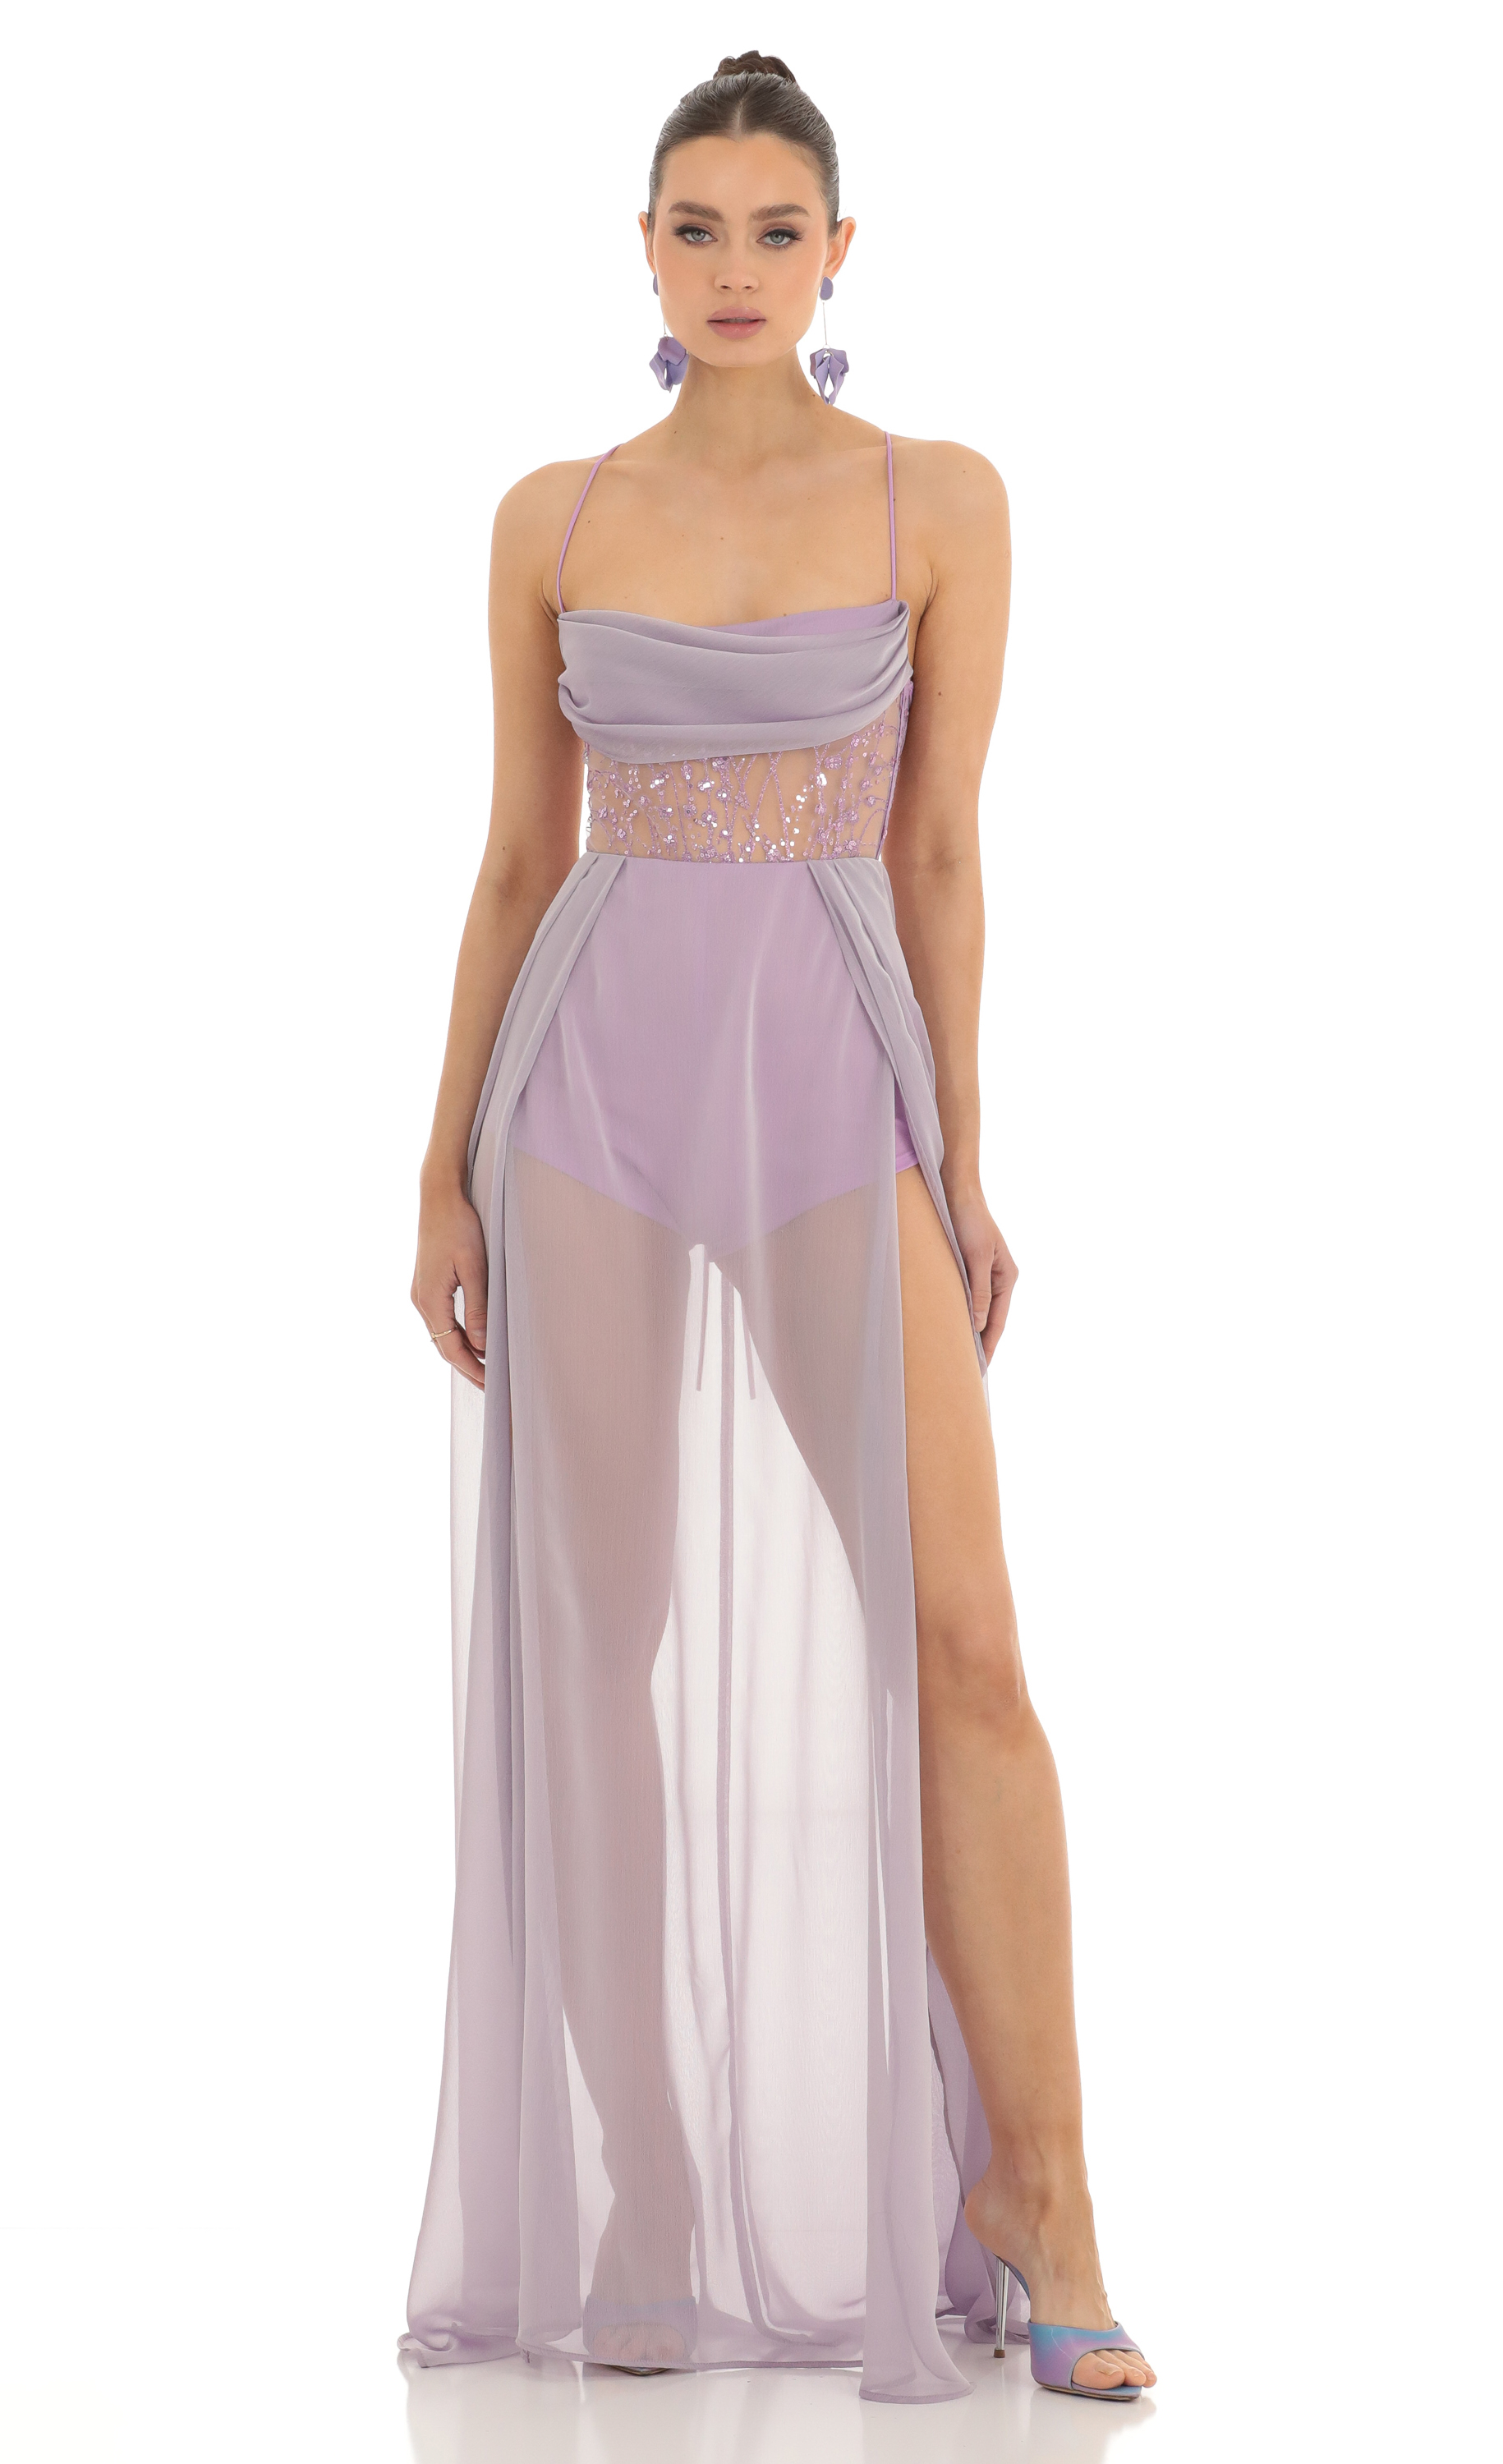 Jordana Chiffon Sheer Maxi Dress in Lavender